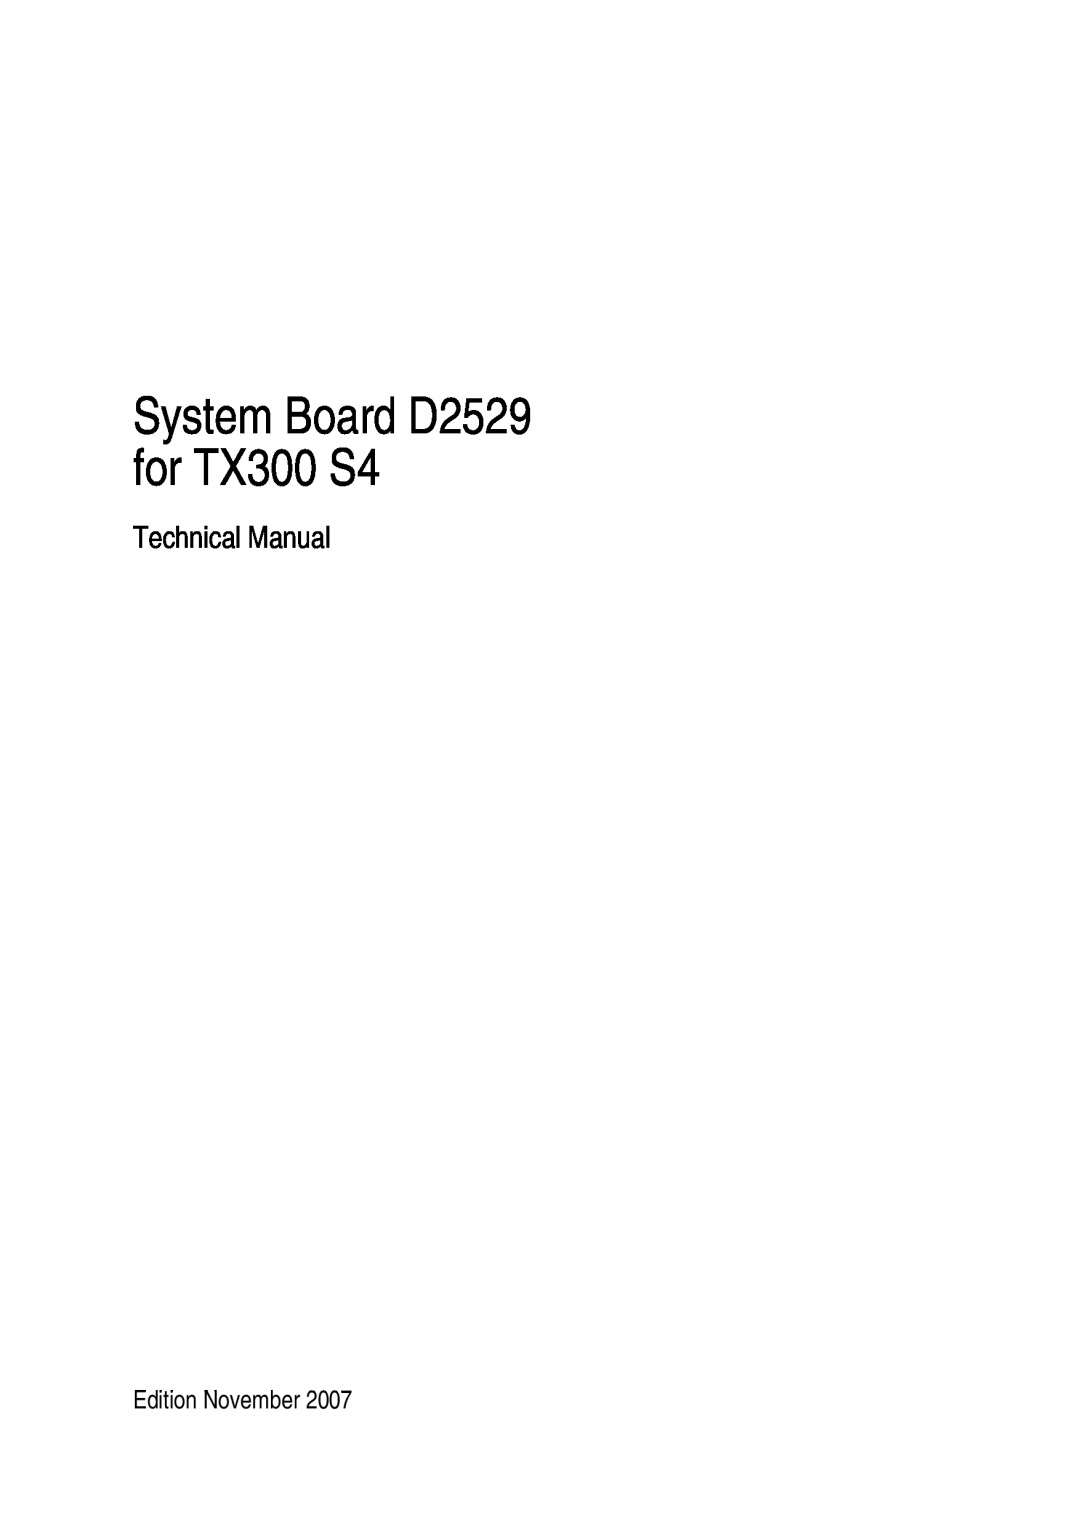 Fujitsu technical manual System Board D2529 for TX300 S4, Technical Manual 